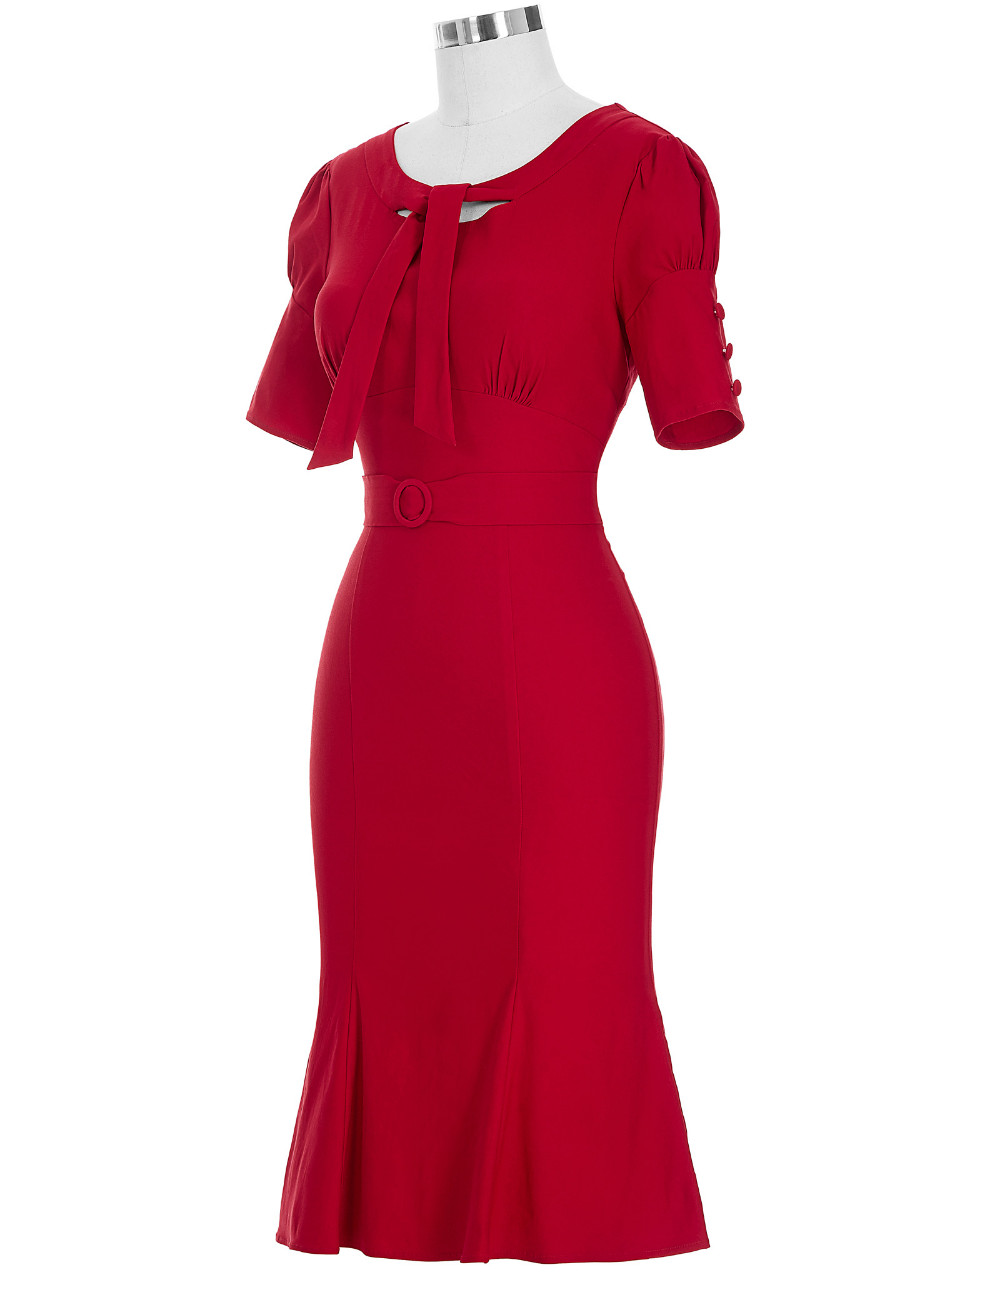 Hips-Wrapped-Mermaid-Pencil-Dress-Short-Sleeve-Red-Summer-Women-Vestidos-Retro-Vintage-Elegant-Penci-32706451786